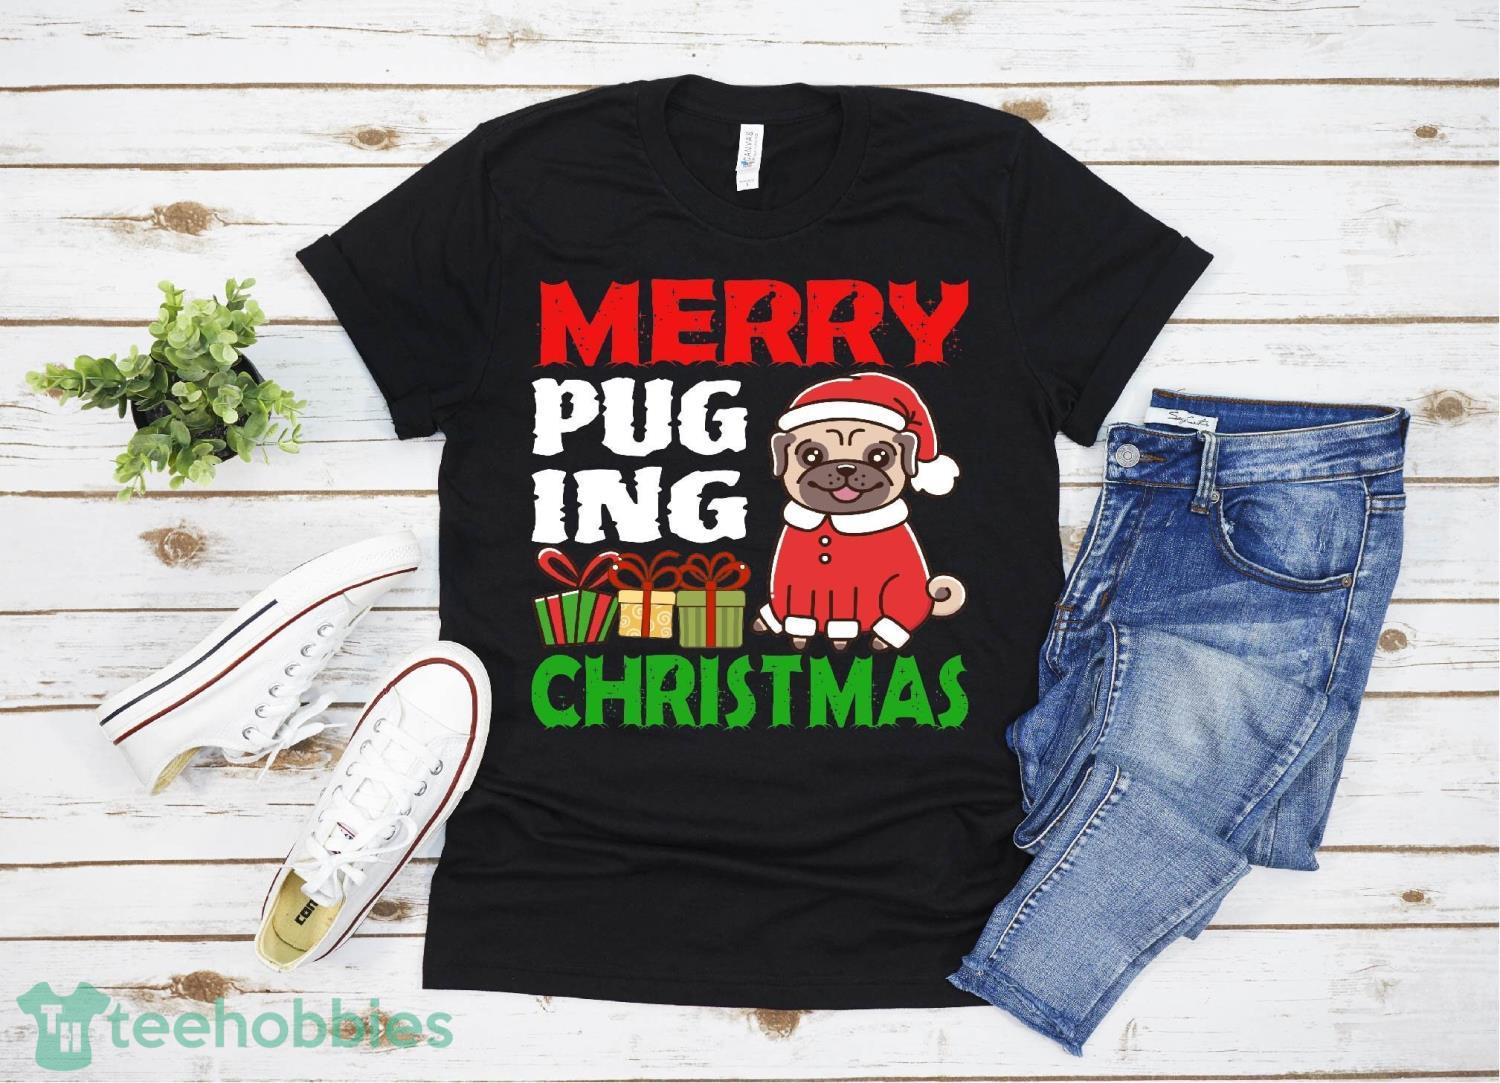 Merry Puging Christmas Dog Santa Pug Xmas Pugmas T-Shirt Christmas Gift Family Christmas Shirt Product Photo 1